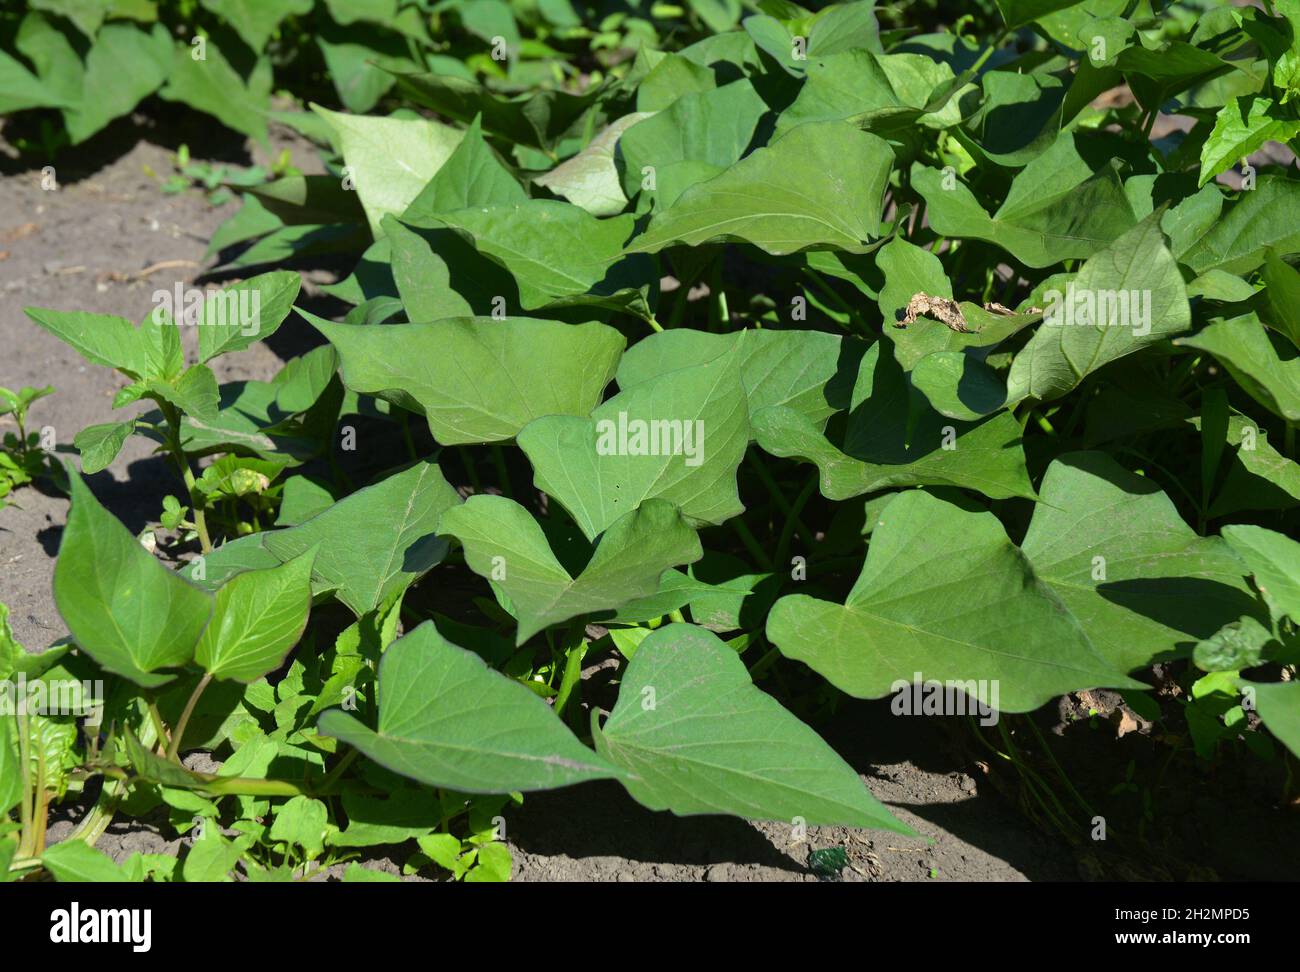 Growing organic sweet potato. The sweet potato or kumara (Ipomoea batatas) is a dicotyledonous plant that belongs to the family Convolvulaceae. Vegan Stock Photo